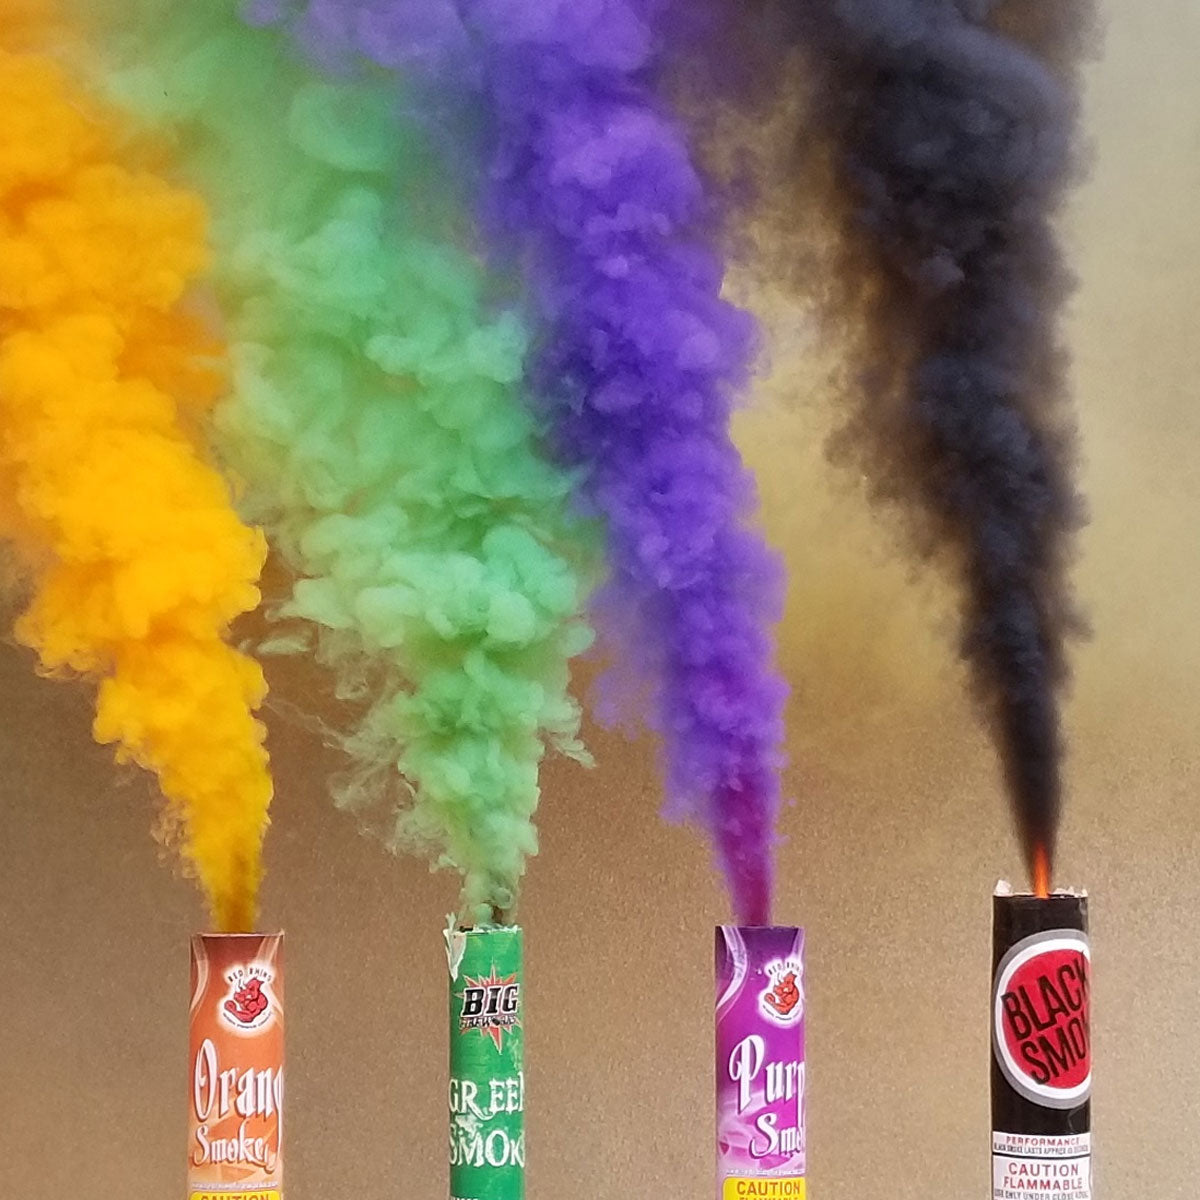 Color Smoke Bombs for Photography